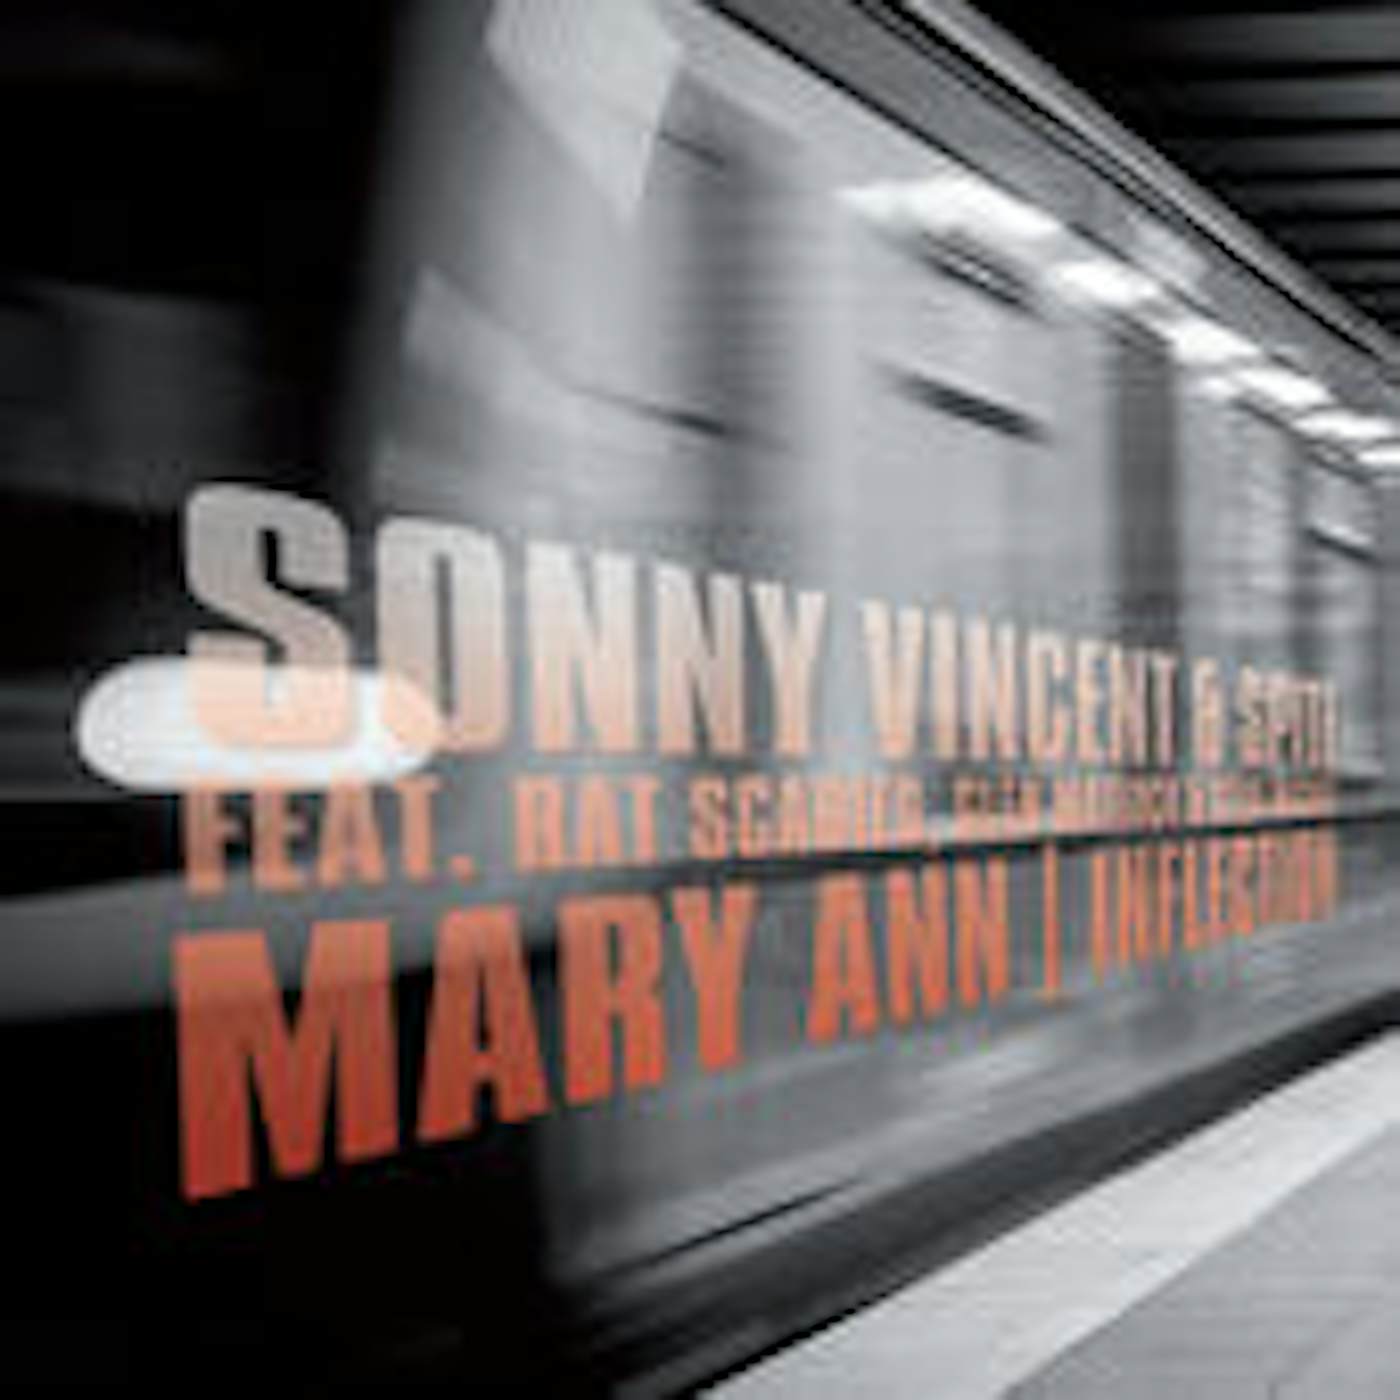 Sonny Vincent & Spite MARY ANN / INFLECTION Vinyl Record